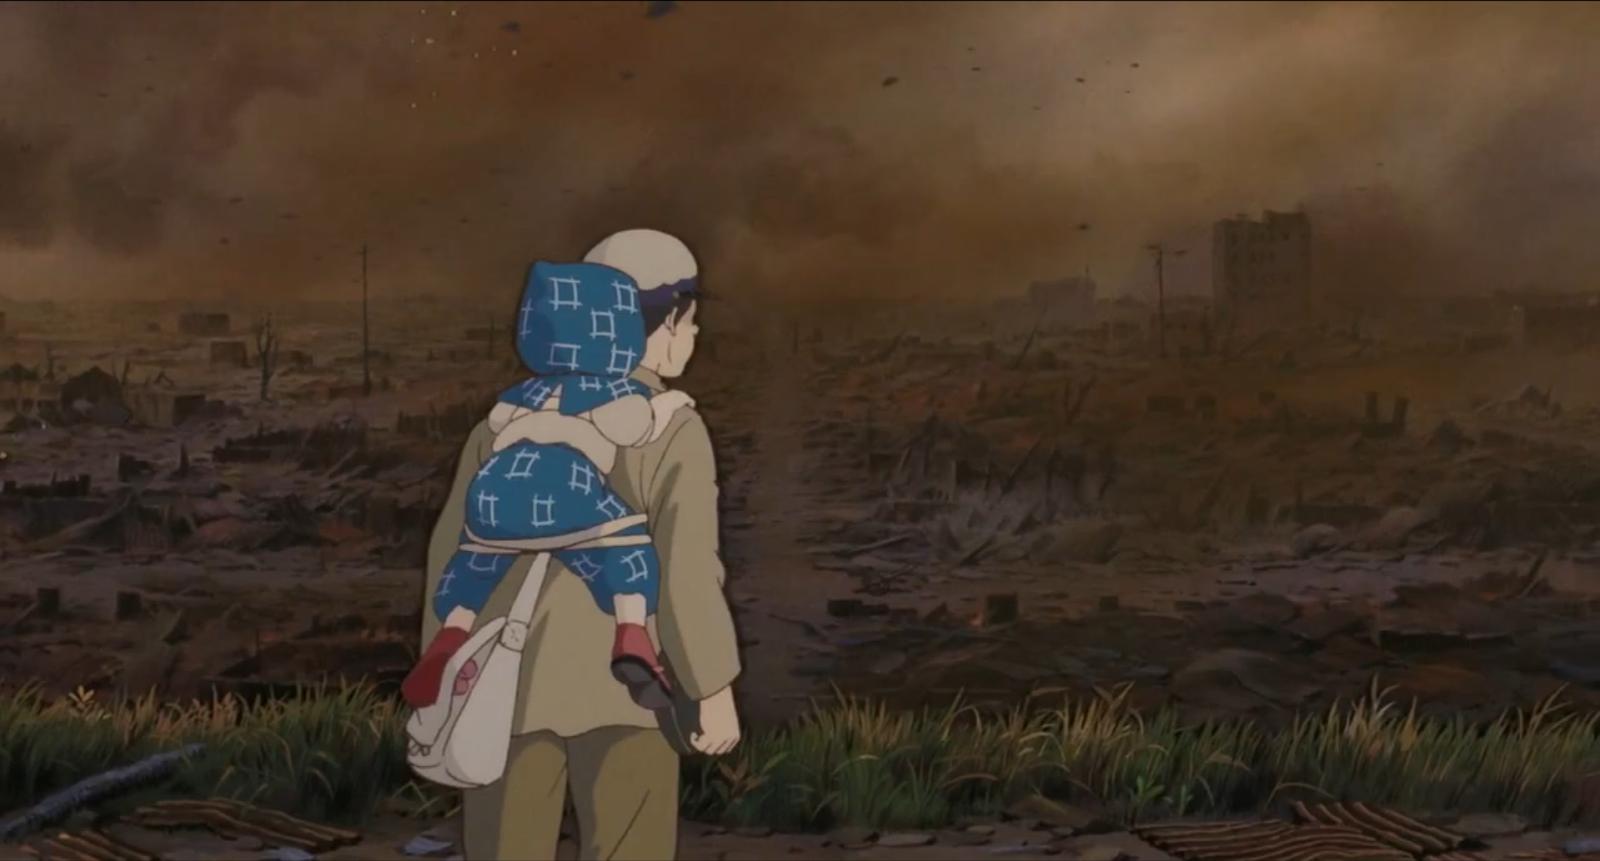 The Studio Ghibli Retrospective: Grave of the Fireflies